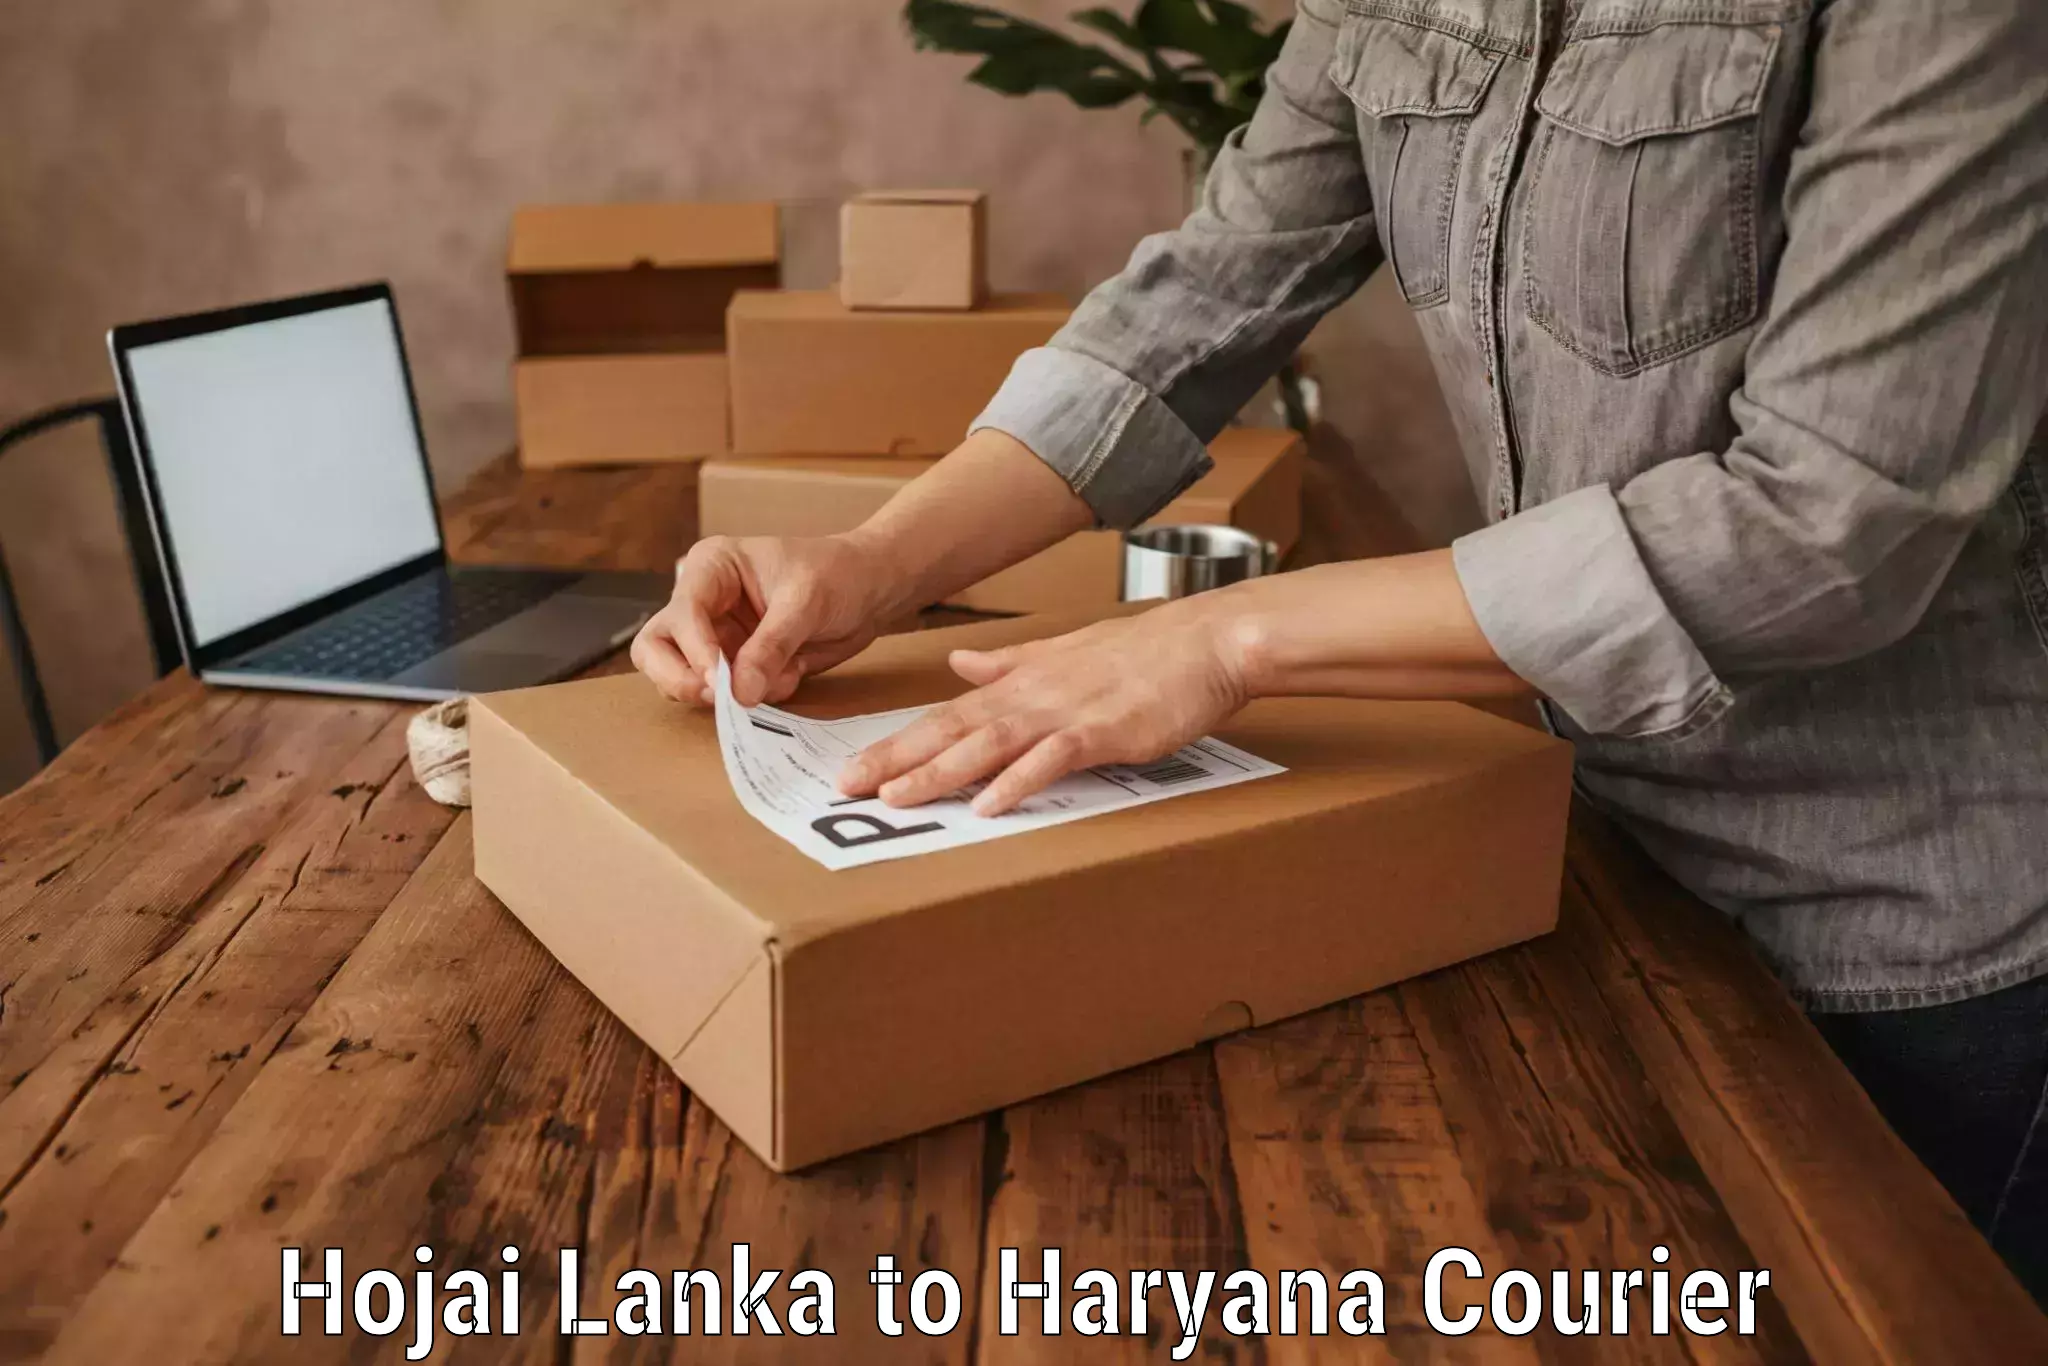 Luggage delivery app Hojai Lanka to Panipat